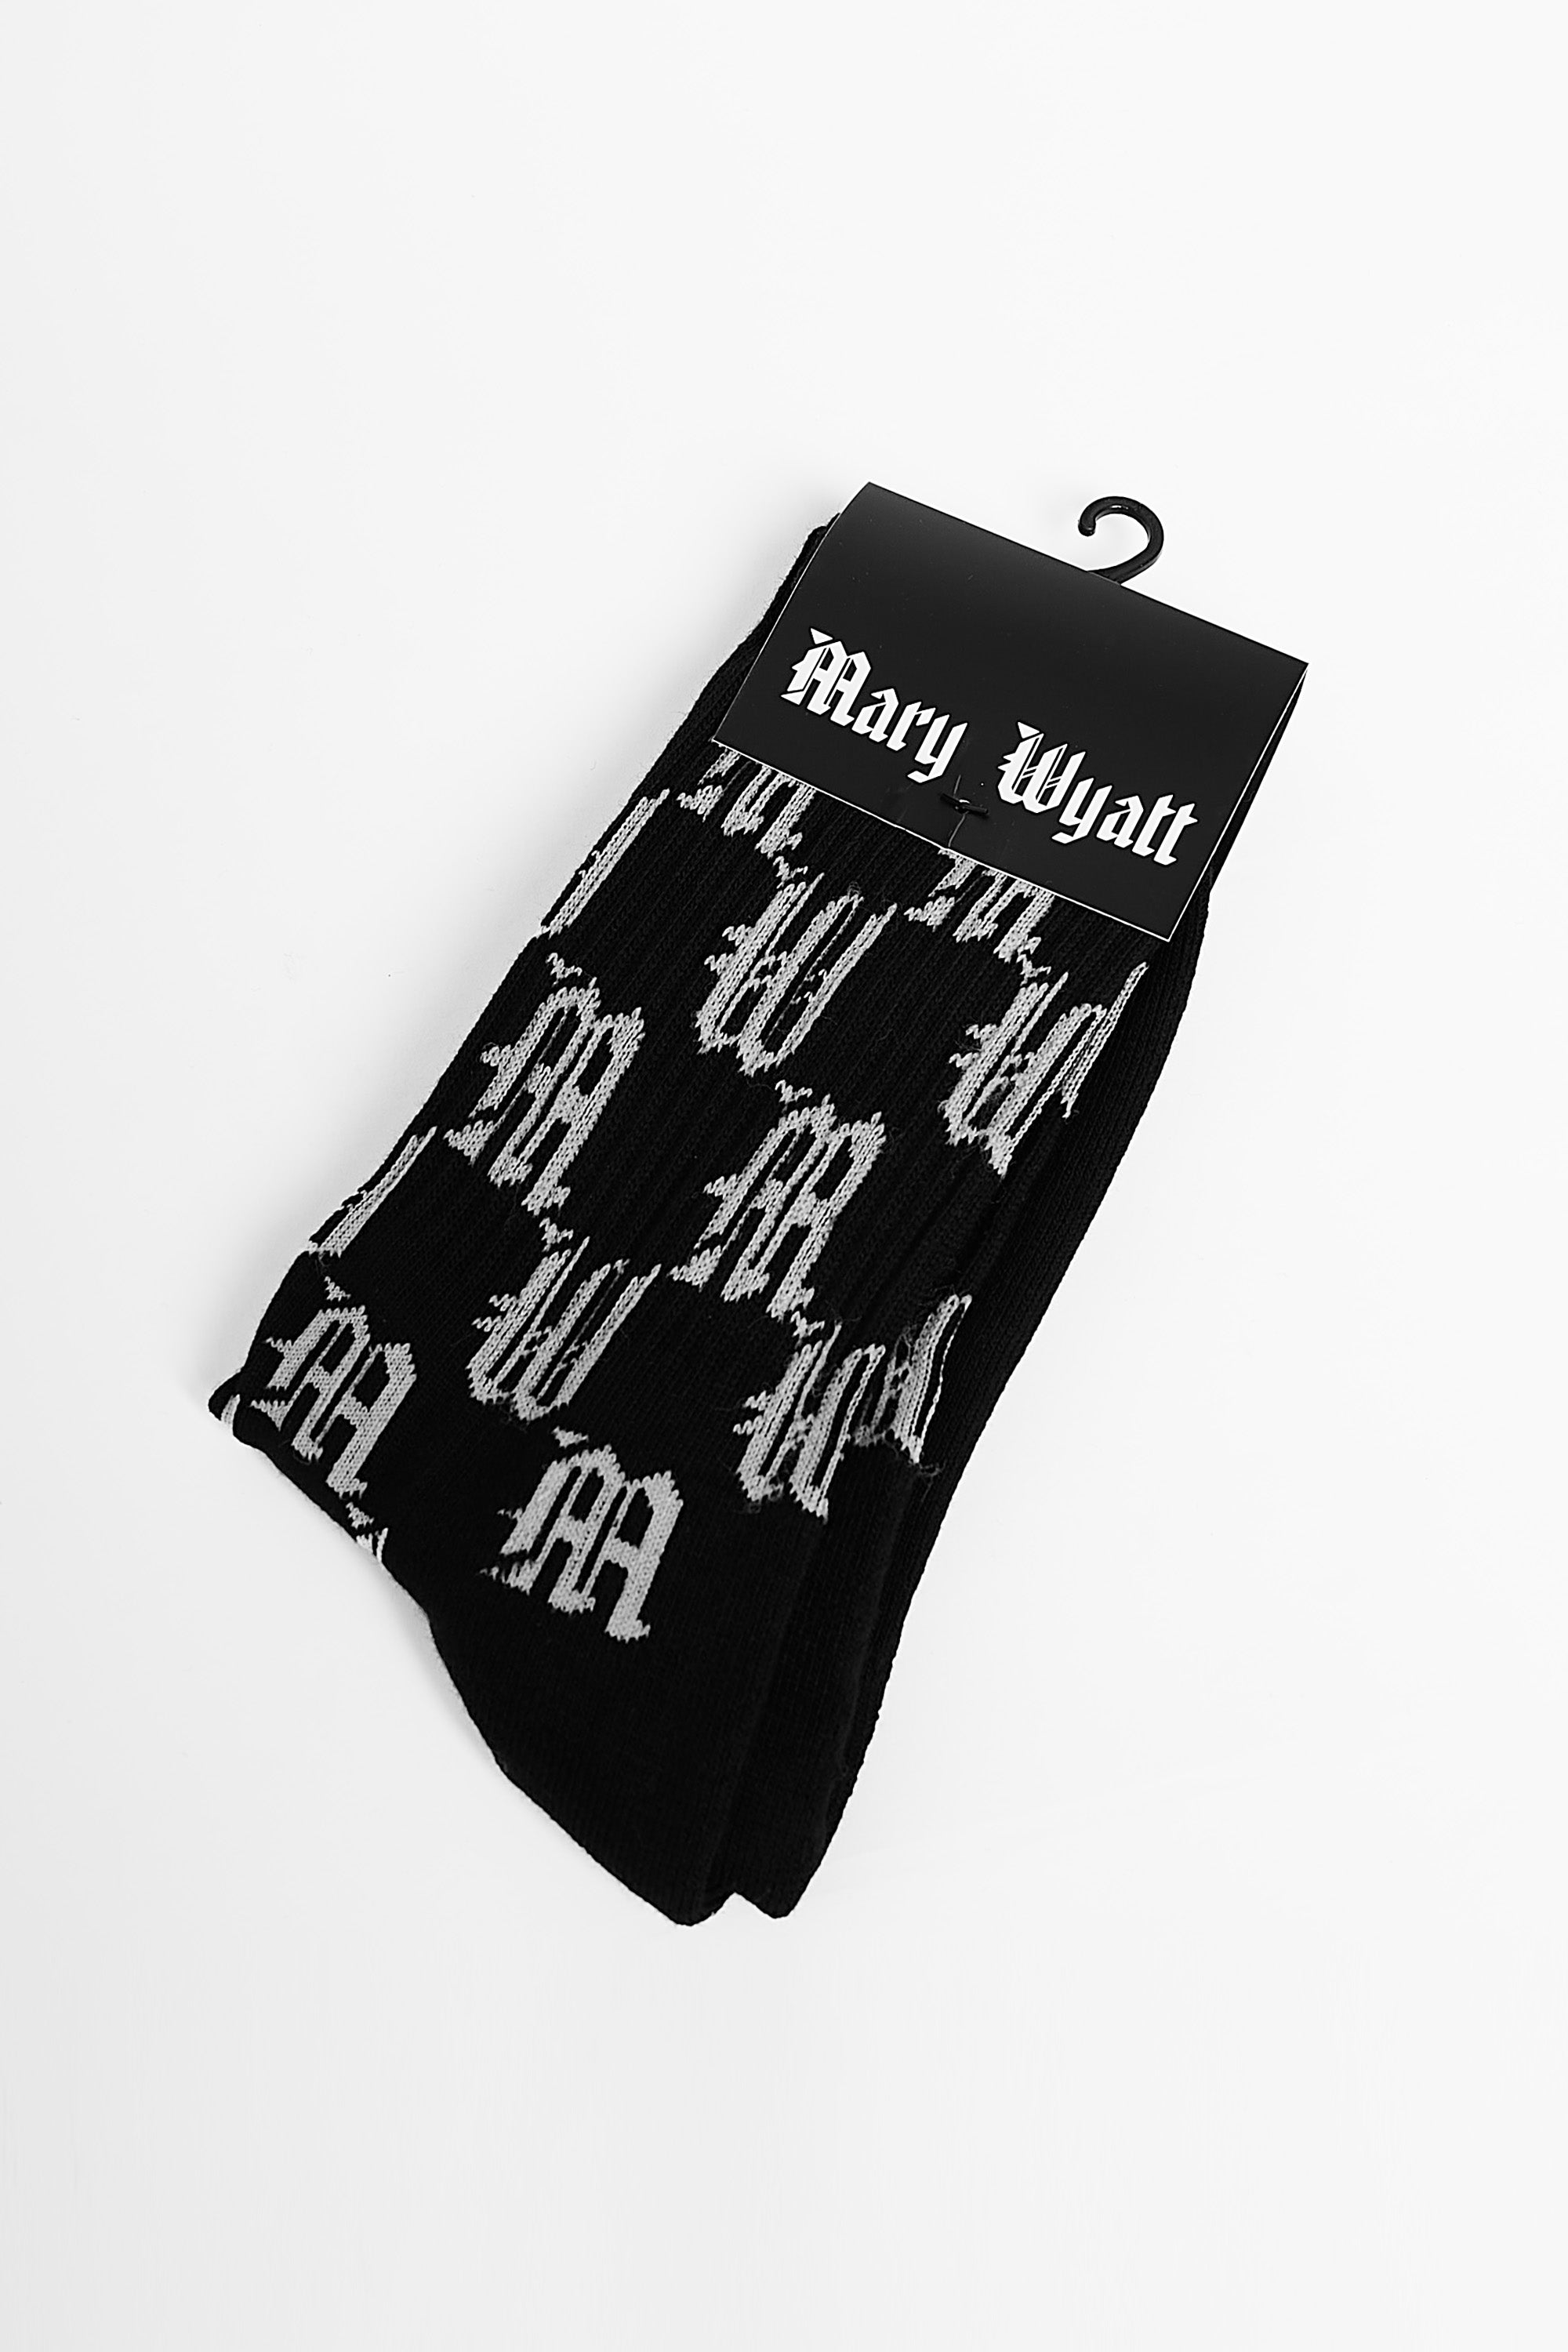 Cipher Socks - Mary Wyatt London